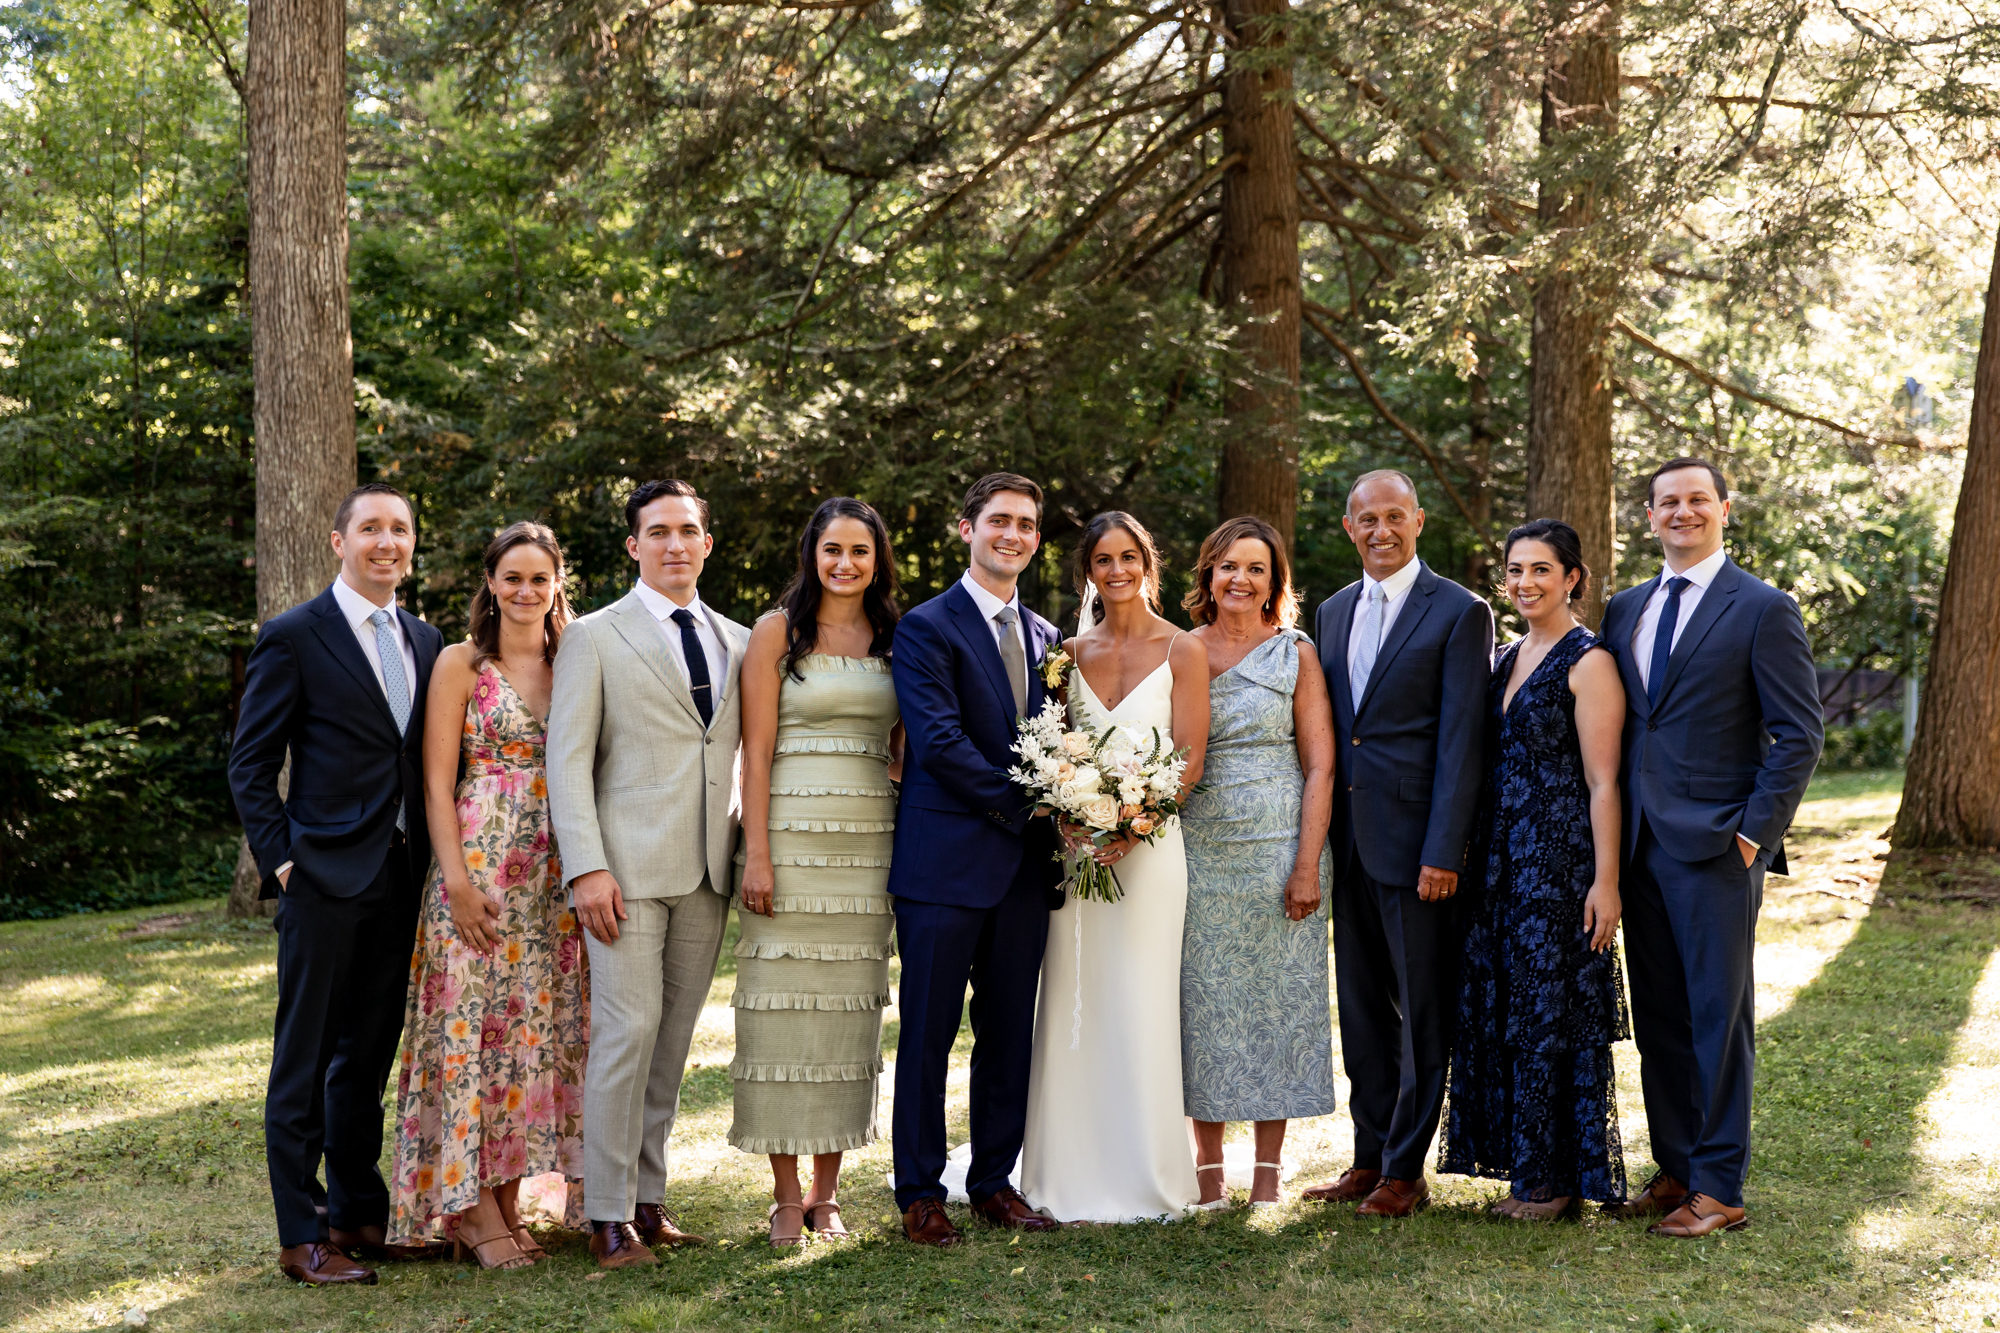 formal family photos after an intimate wedding in the poconos, pennsylvania